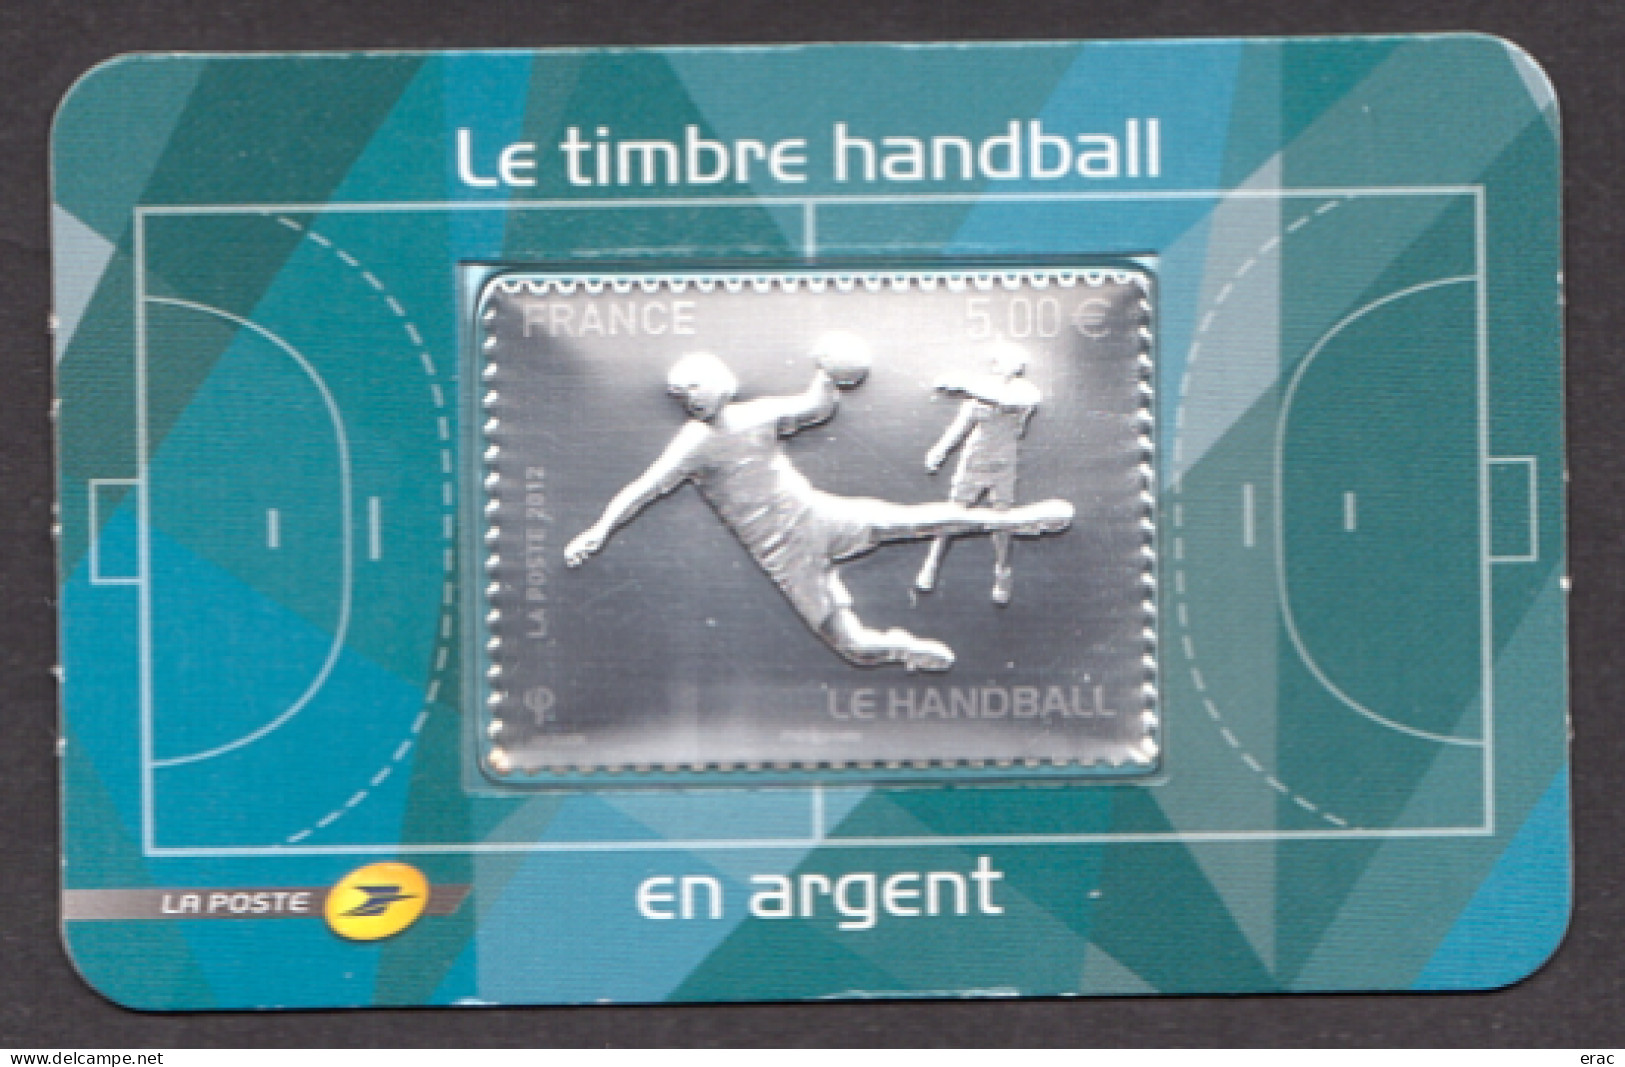 France - 2012 - Autoadhésif N° 738 - Neuf ** - Le Handball - Timbre Argent Sous Blister Cartonné - Ungebraucht